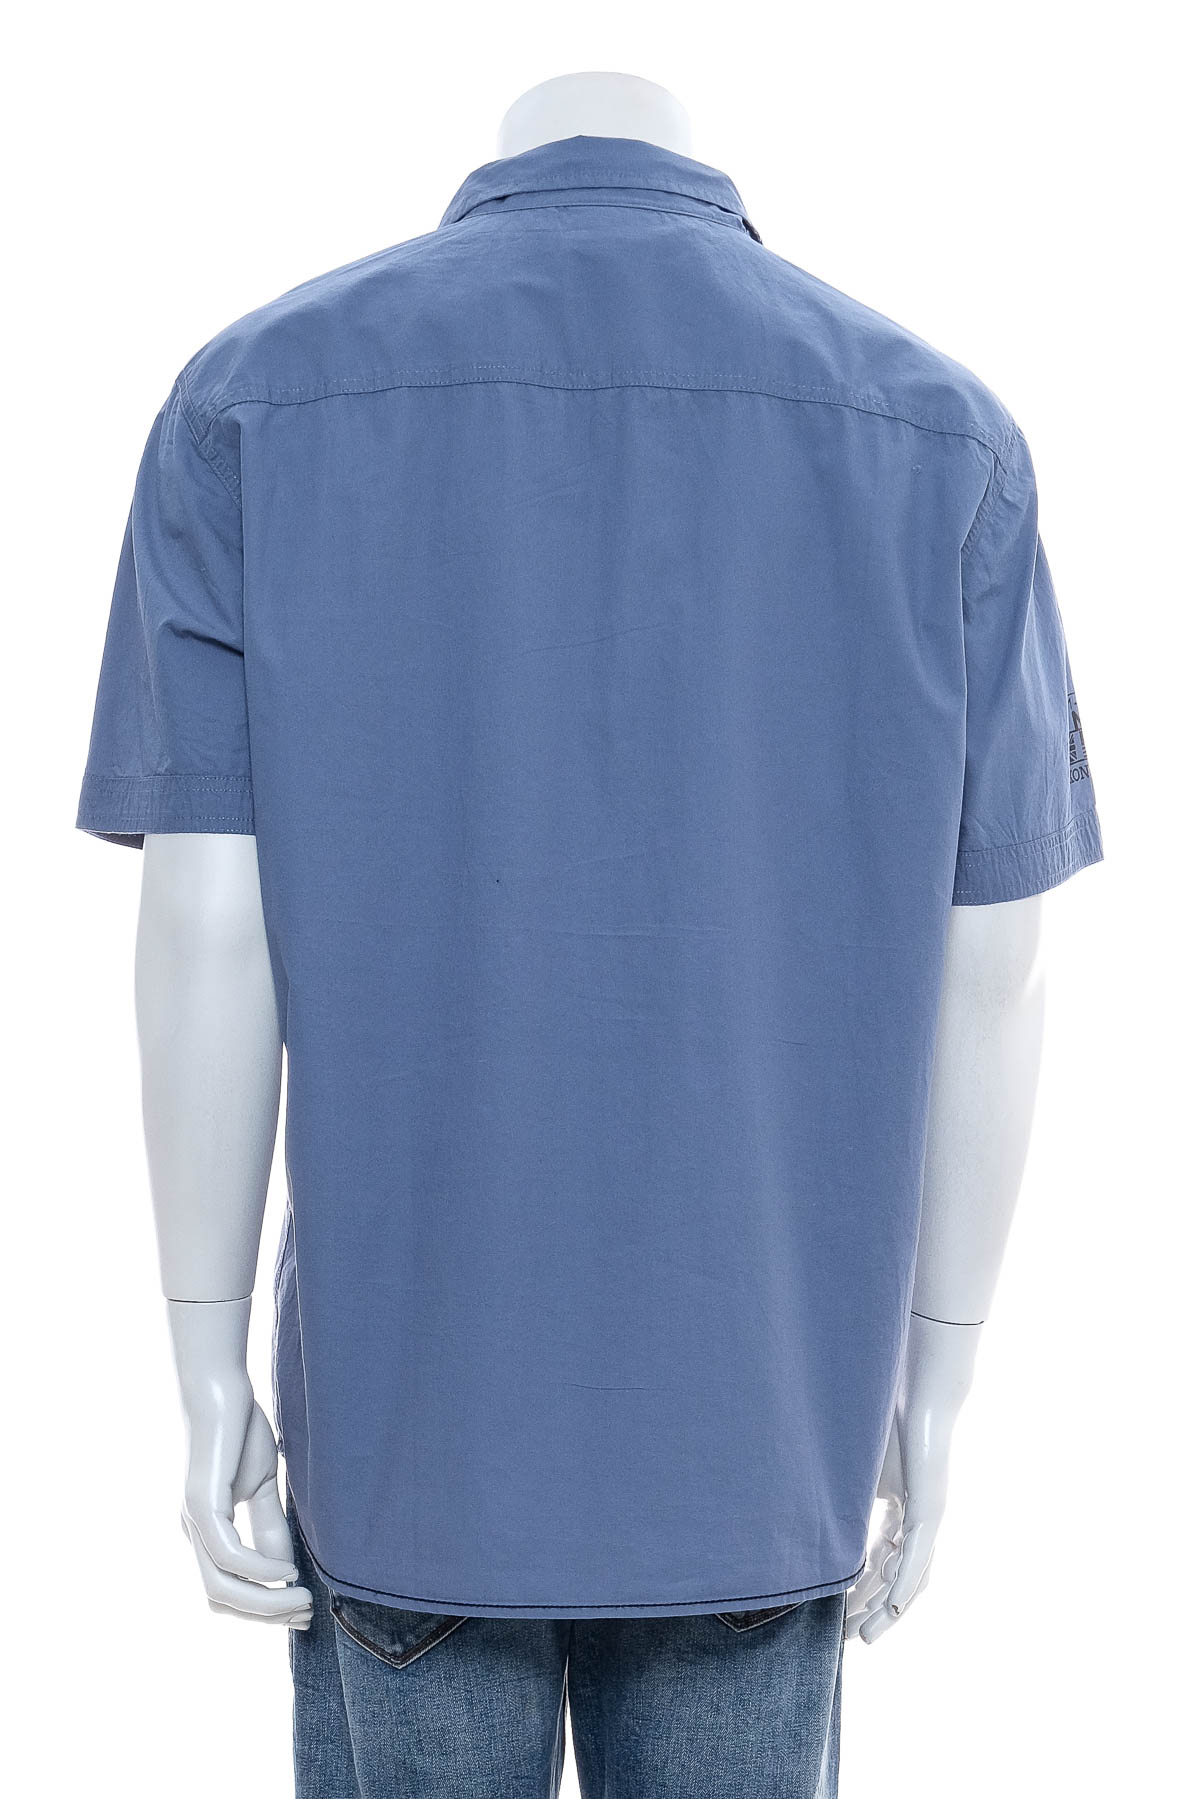 Men's shirt - Bpc selection bonprix collection - 1